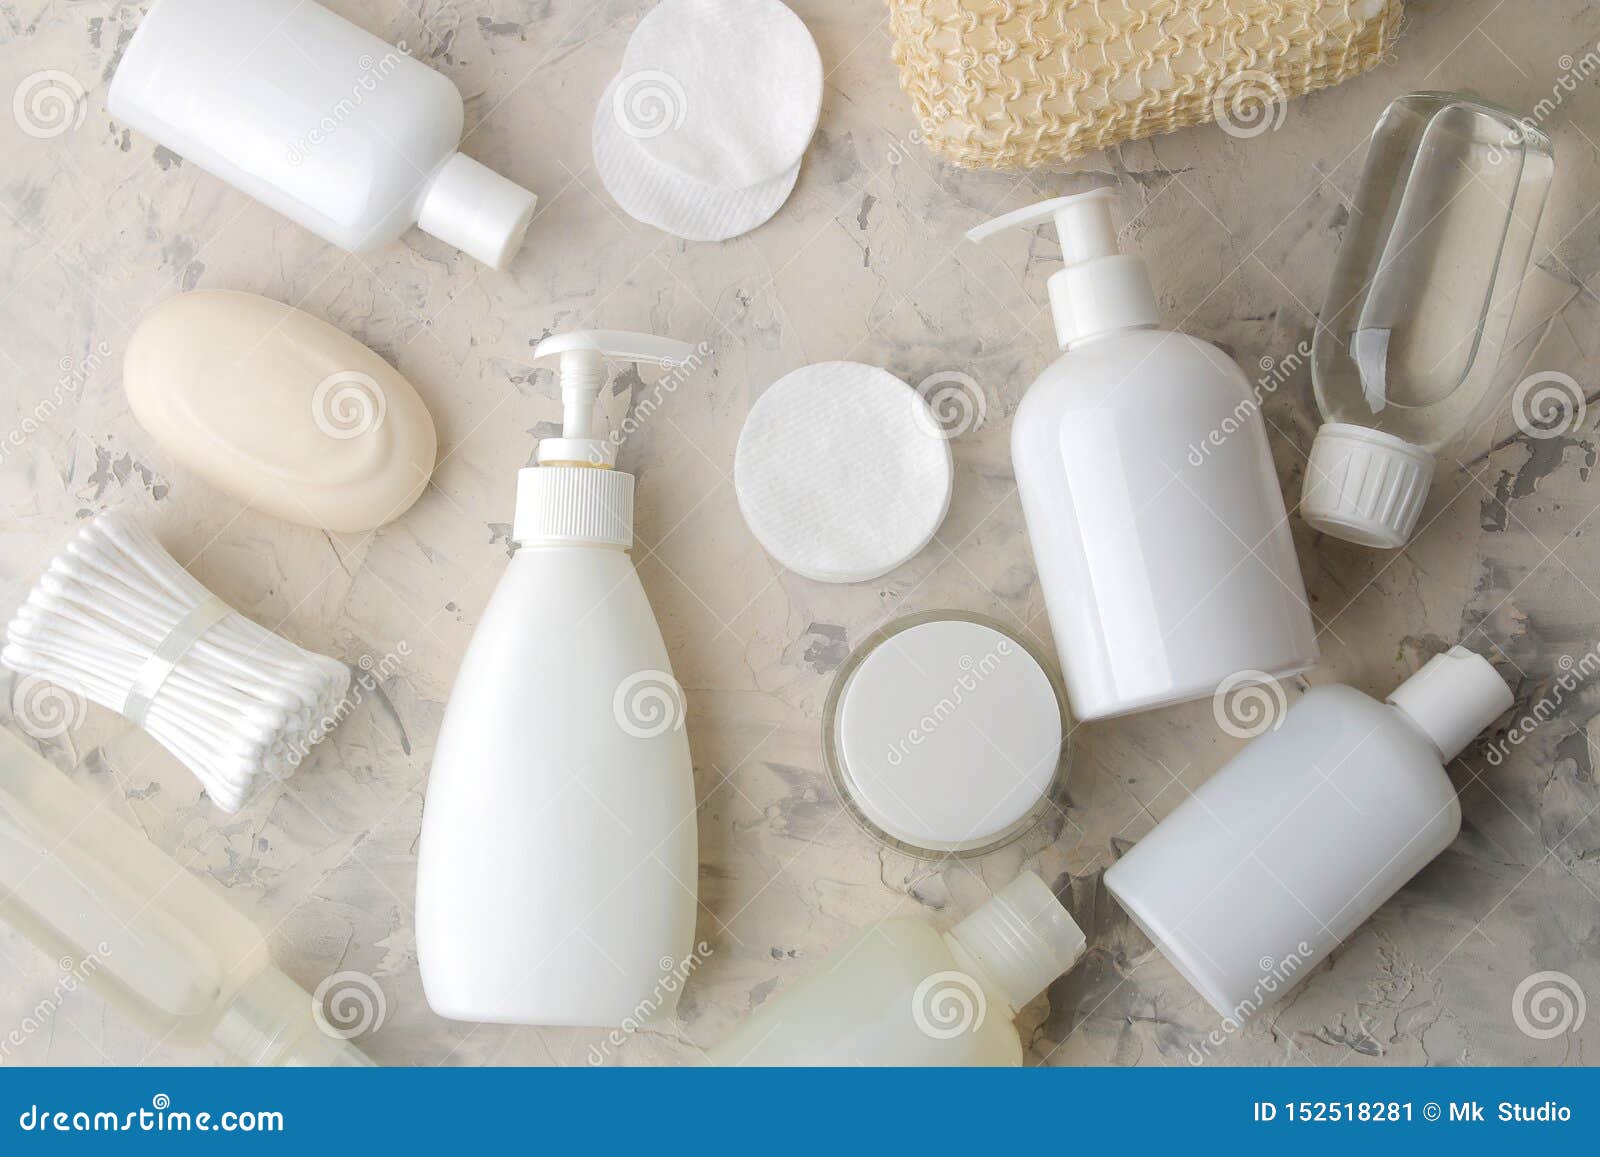 Hygiene free products personal FREE Shampoo